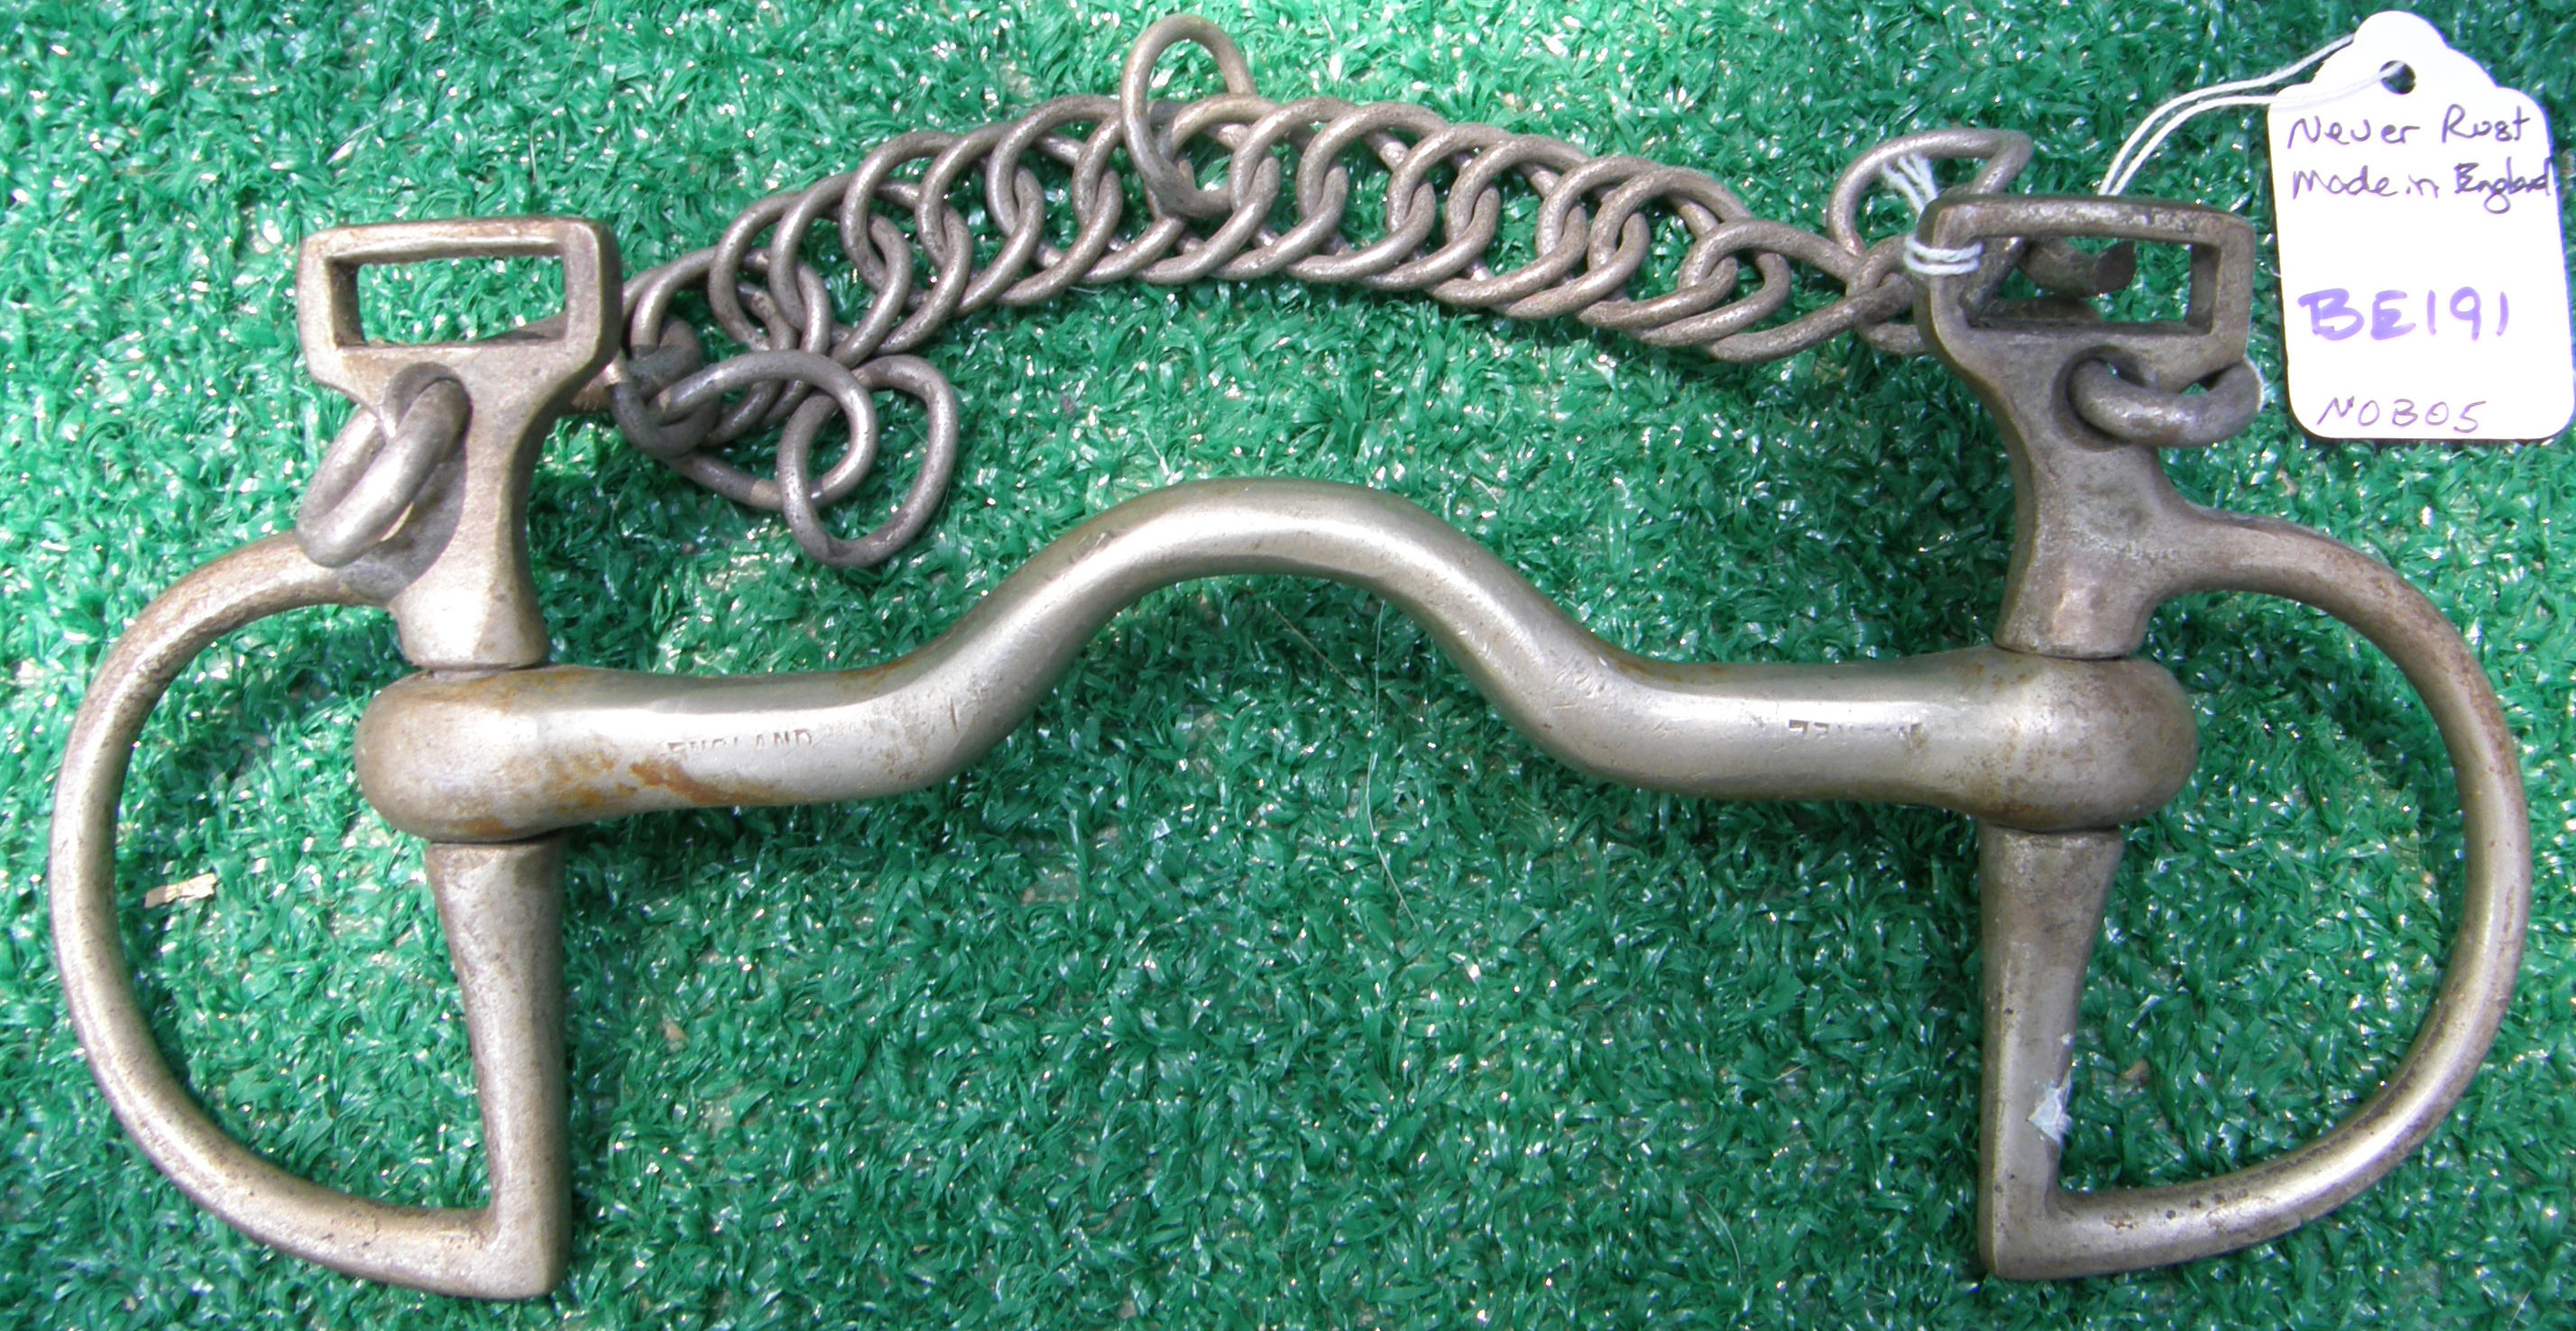 Never Rust 5” Medium to High Port Kimberwicke Bit with Curb Chain